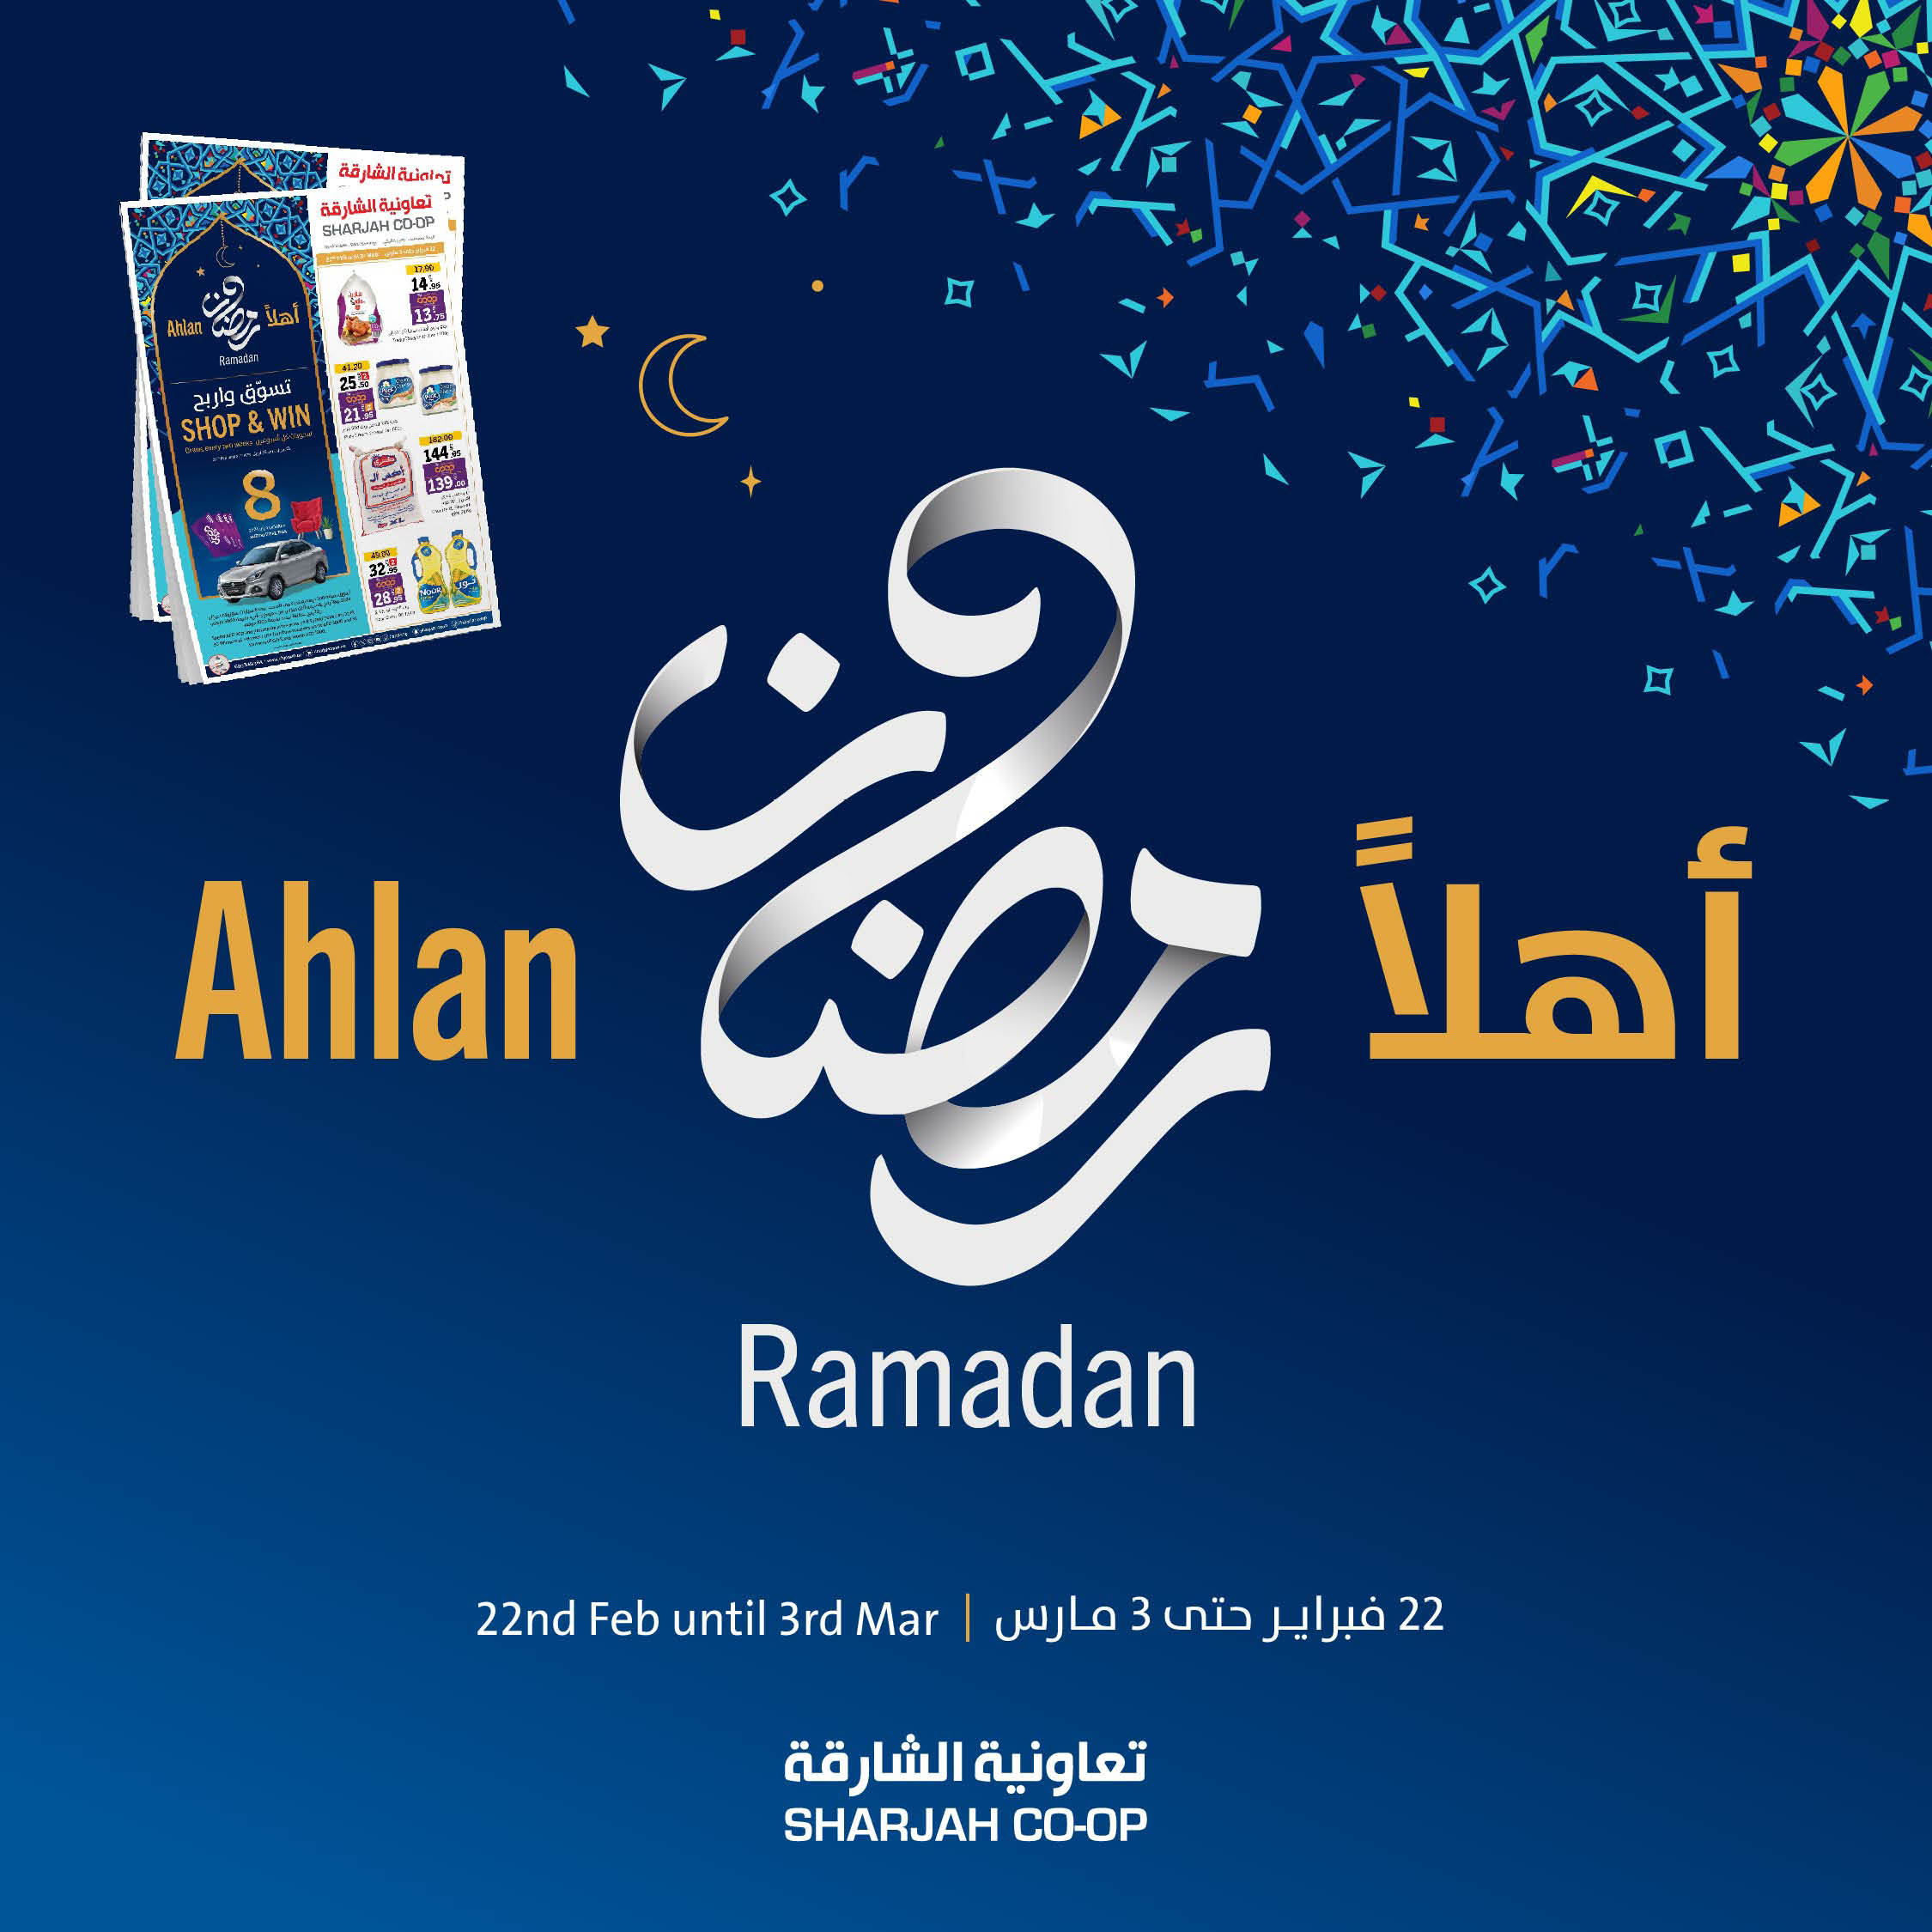 Ahlan Ramdan Offers 